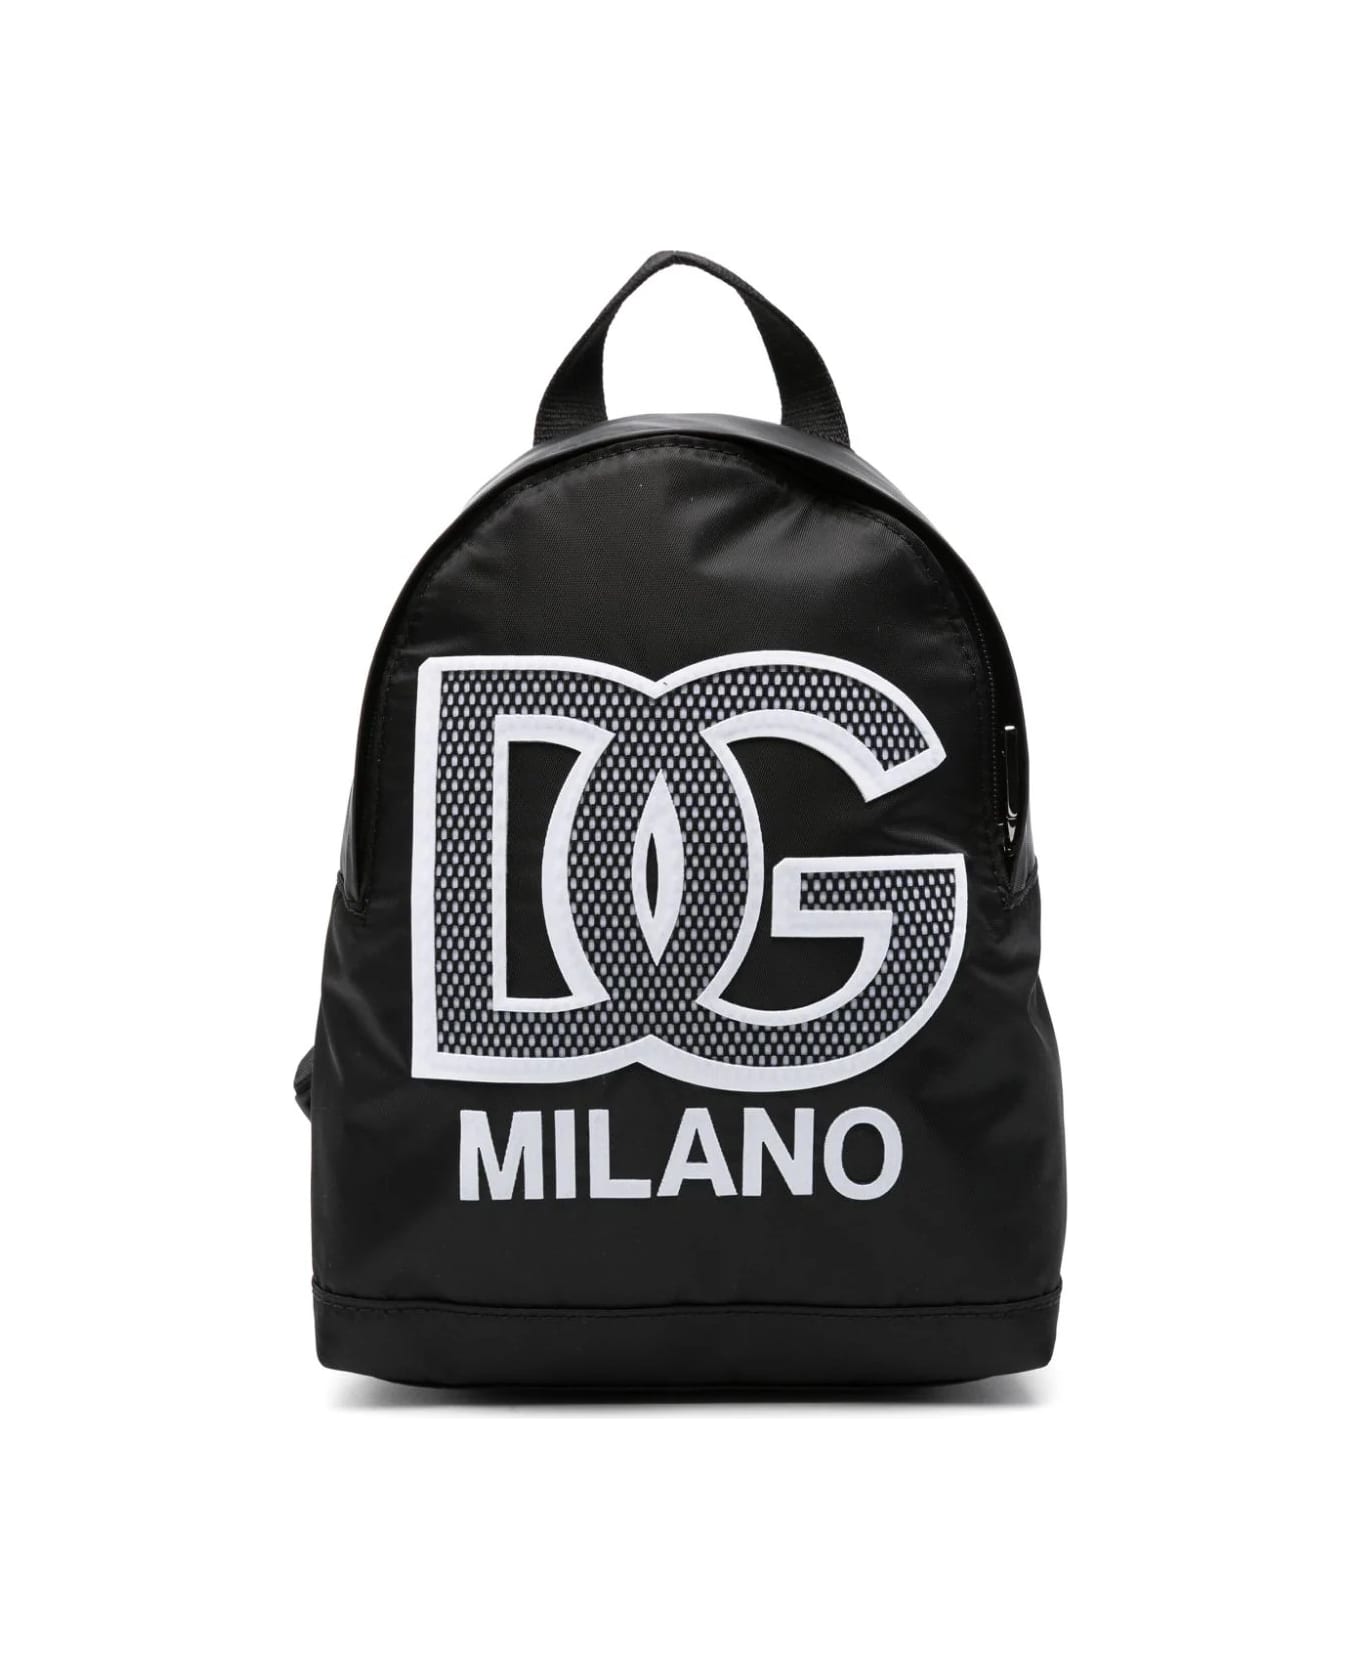 Dolce & Gabbana Black Nylon Backpack With Dg Logo - Black